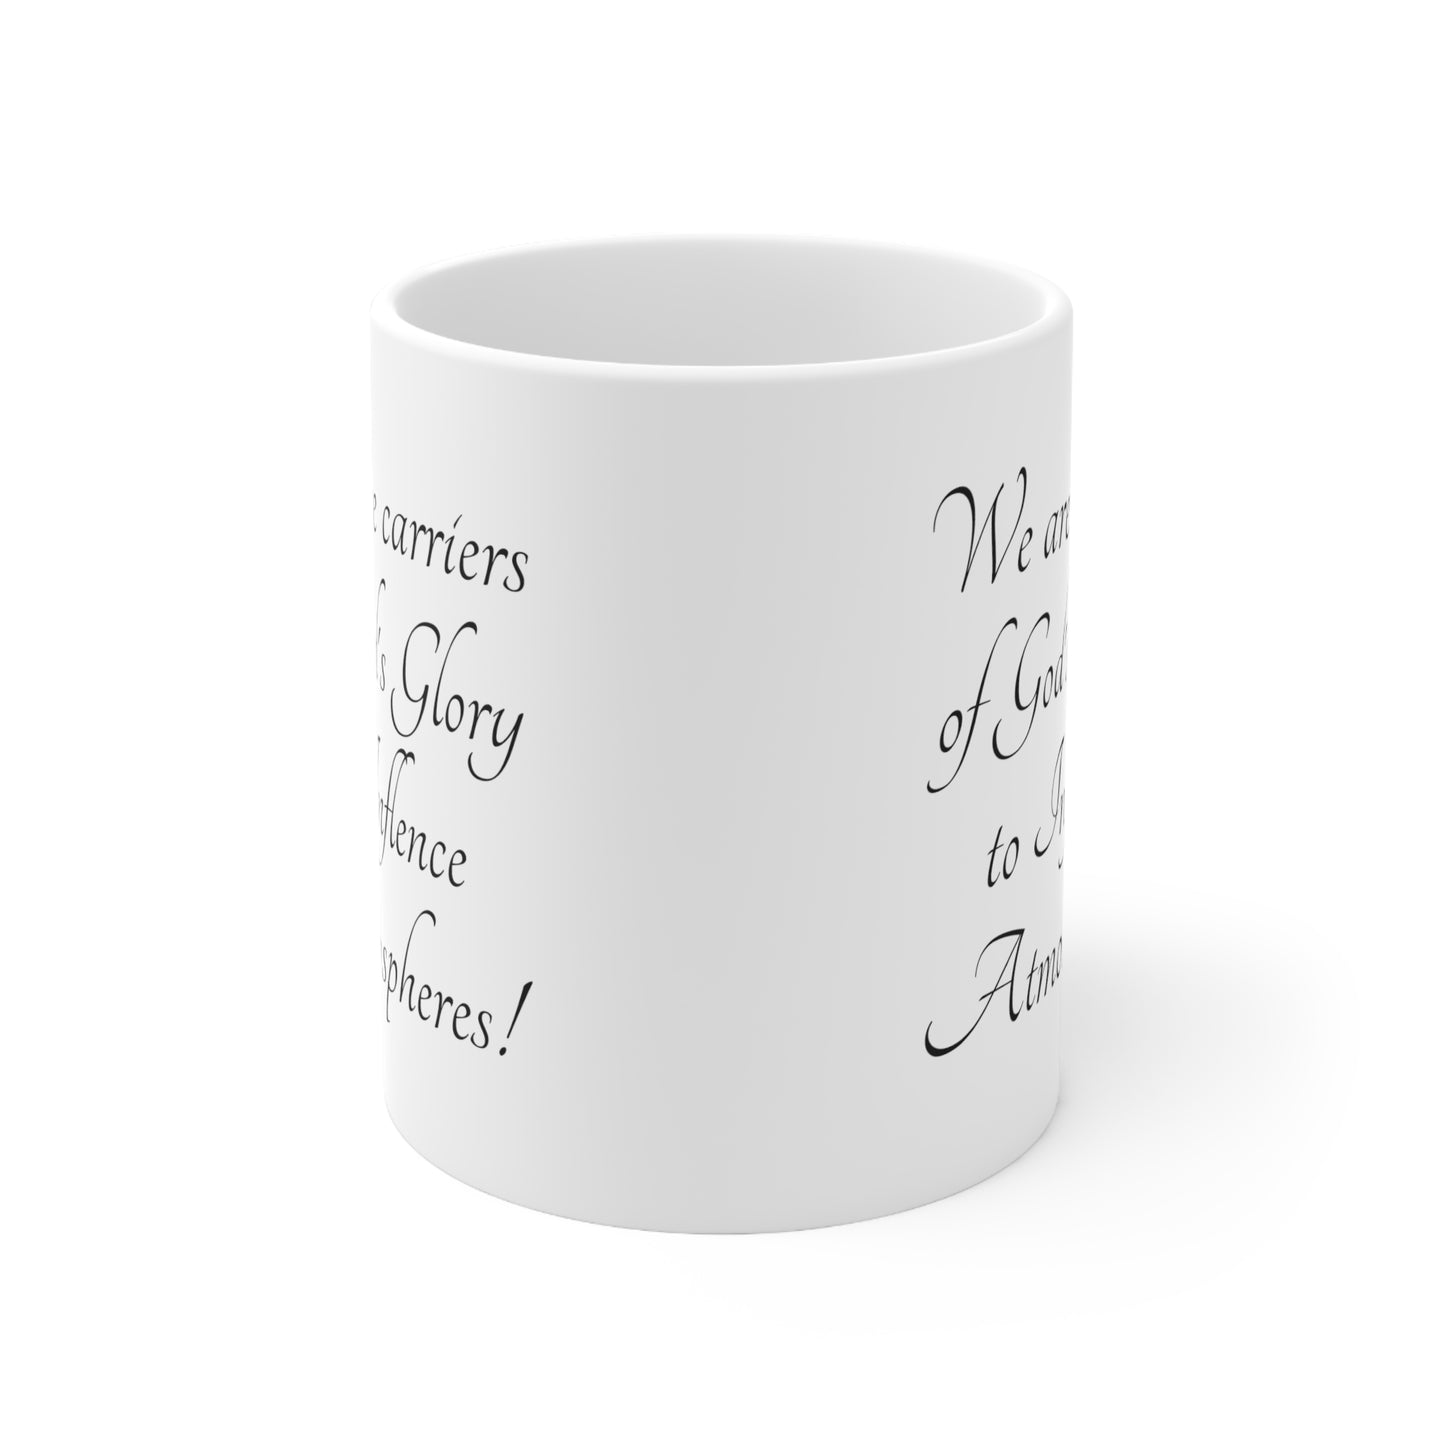 Carriers of Glory White Ceramic Mug 11oz